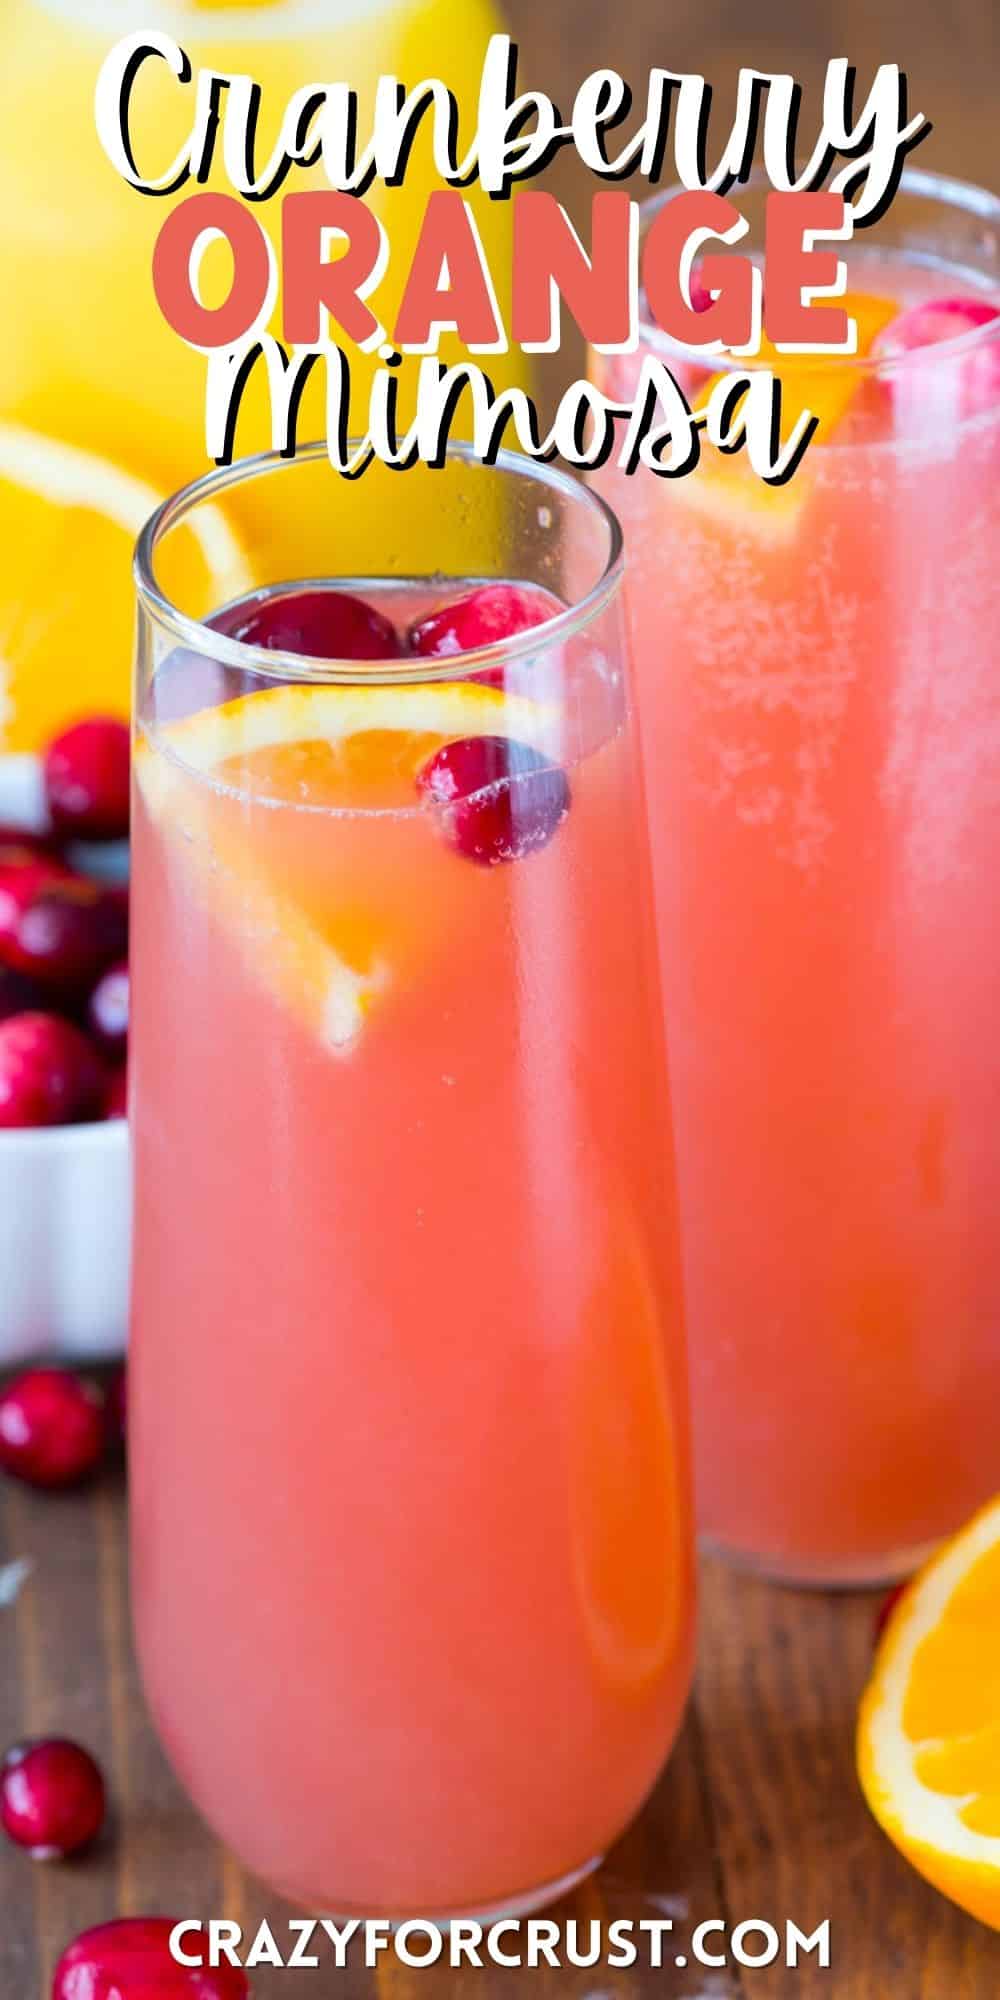 https://www.crazyforcrust.com/wp-content/uploads/2022/12/cranberry-orange-mimosa.jpg